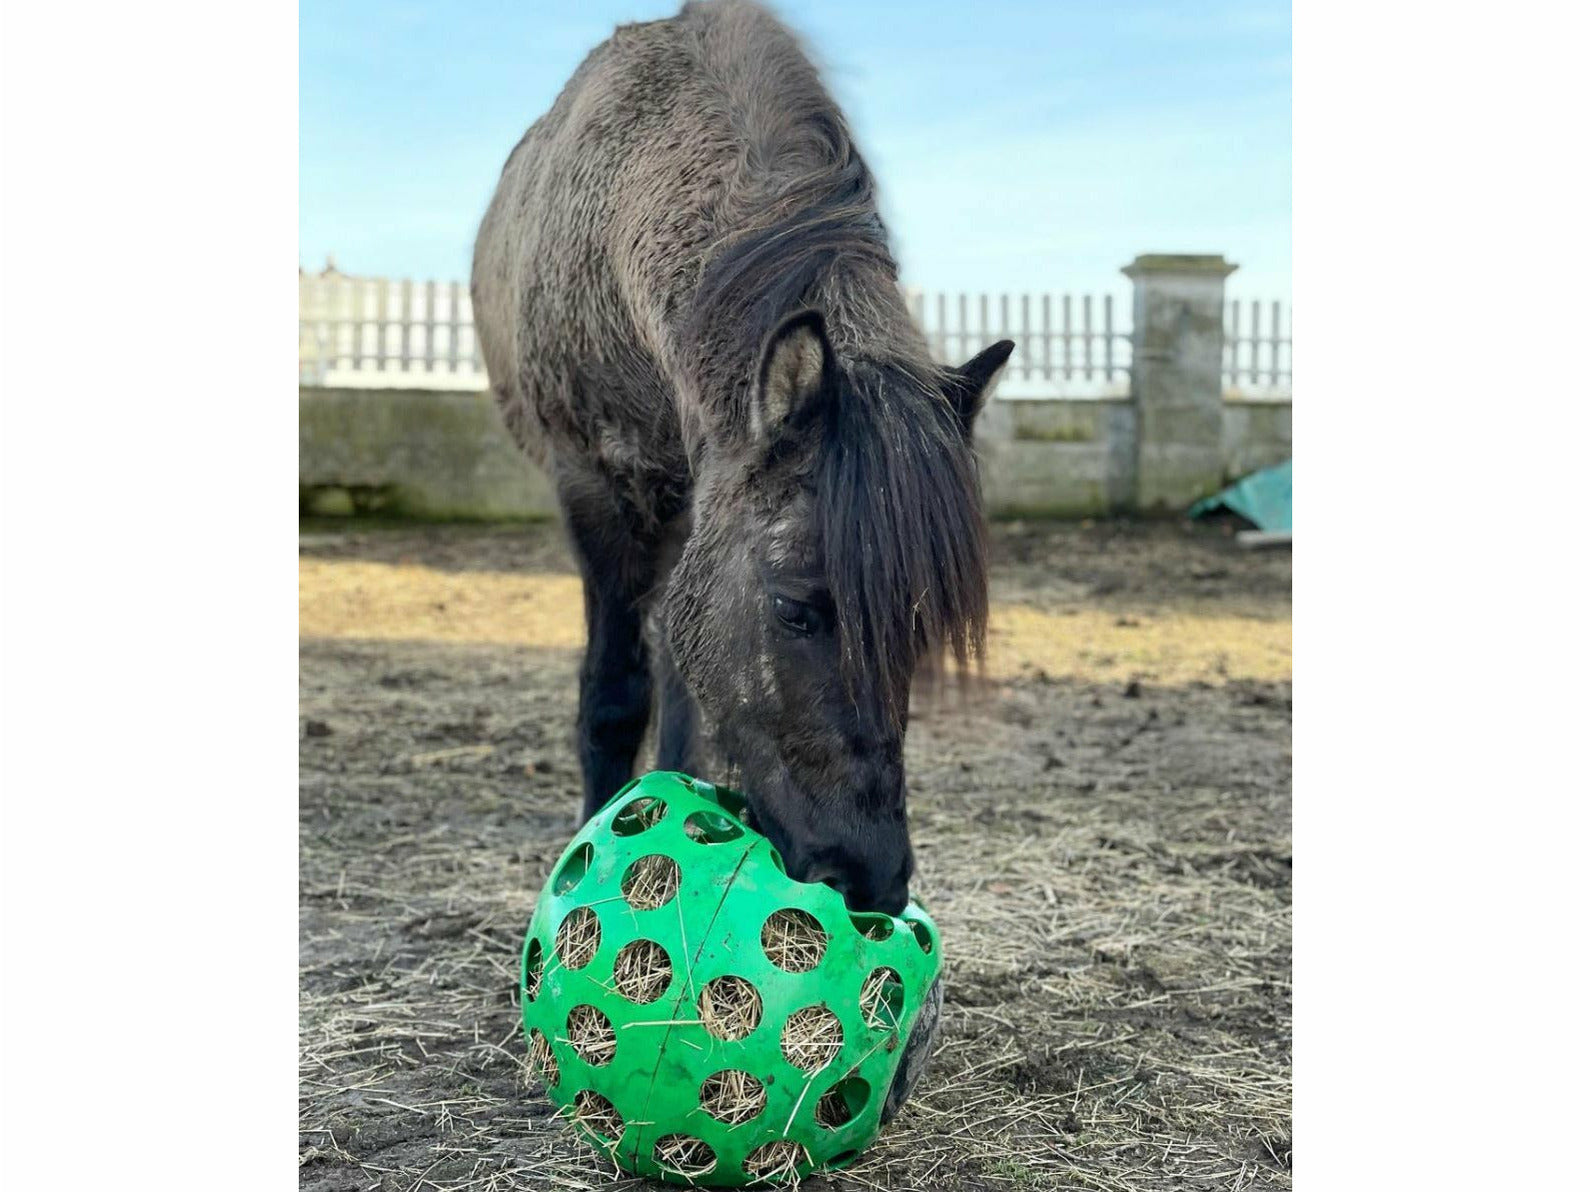 Icelandic Horse feed ball - hay ball